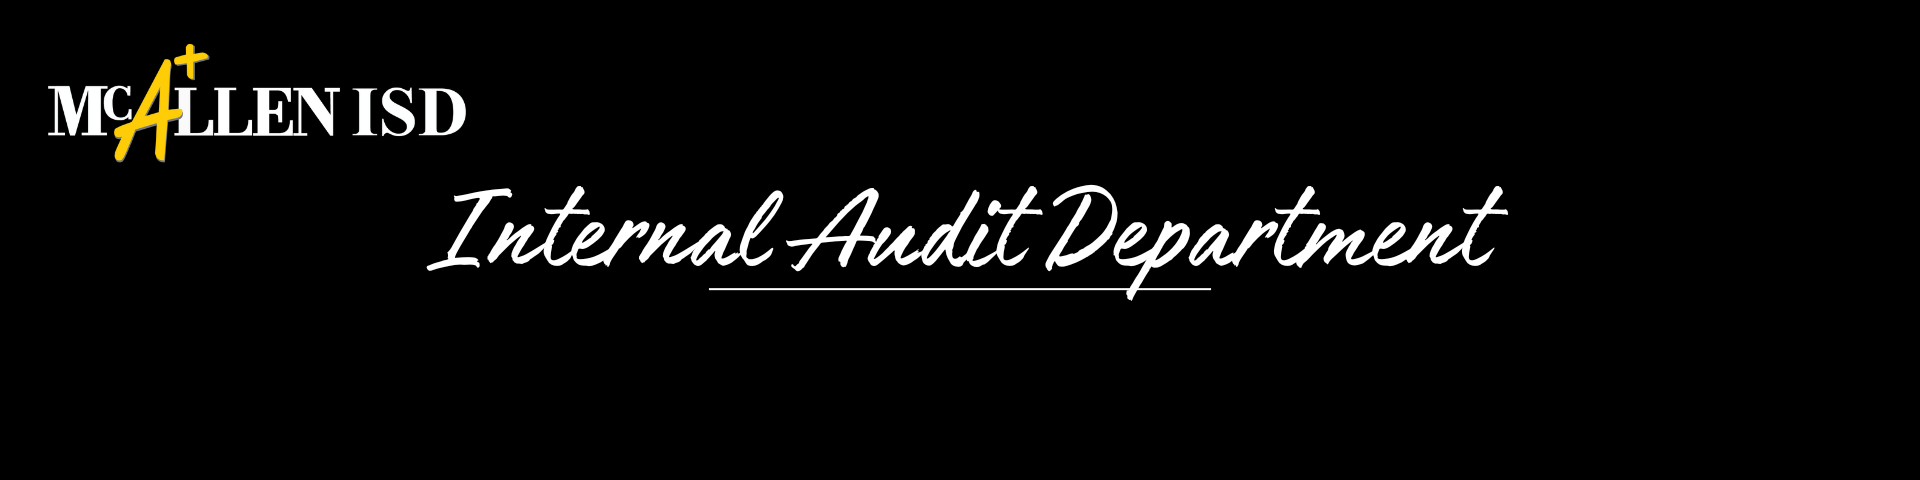 Internal Audit Title Page